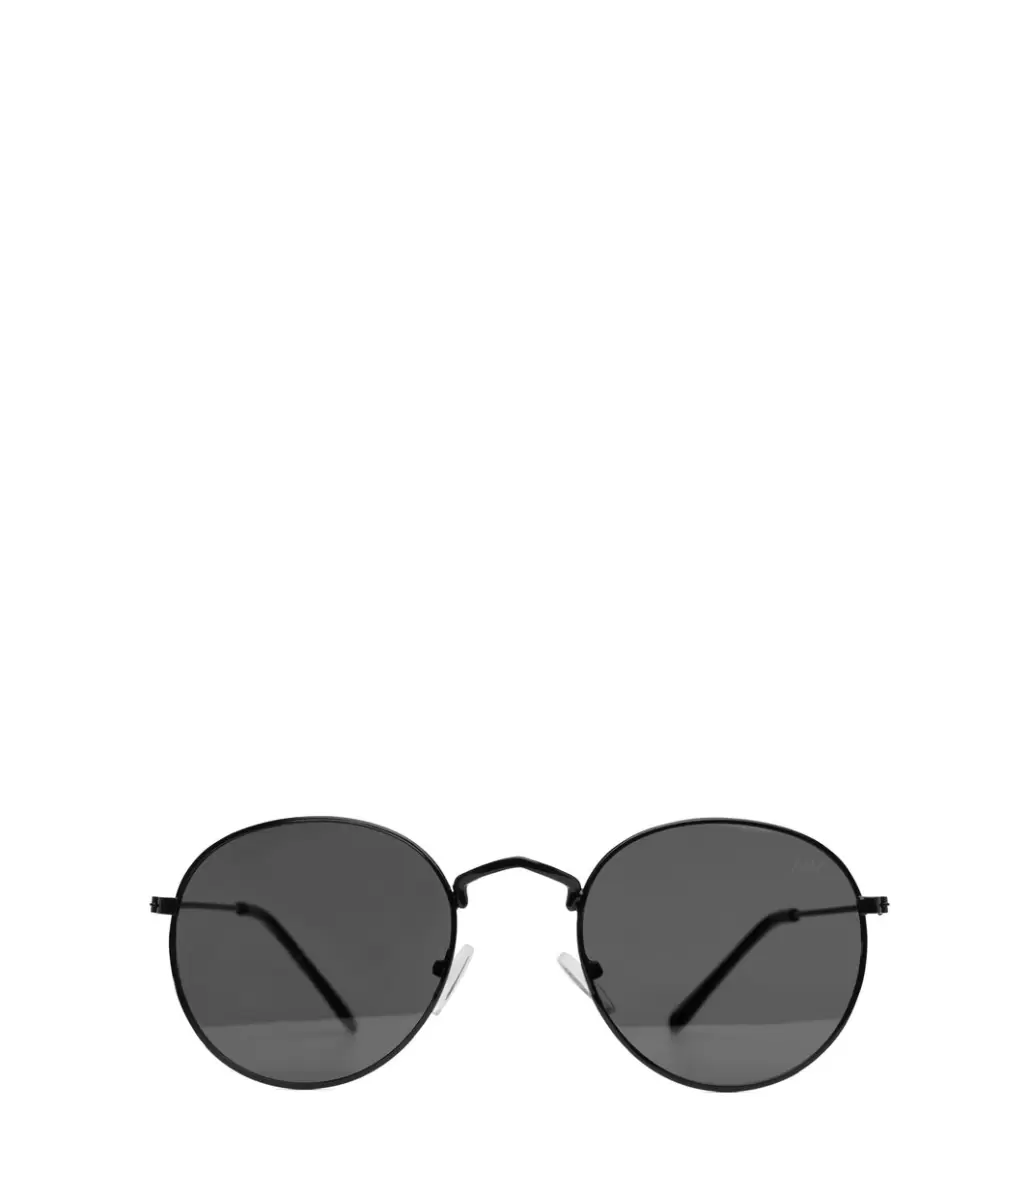 Tolli Round Sunglasses Blkblk Sunglasses Women Matt & Nat Energy-Efficient